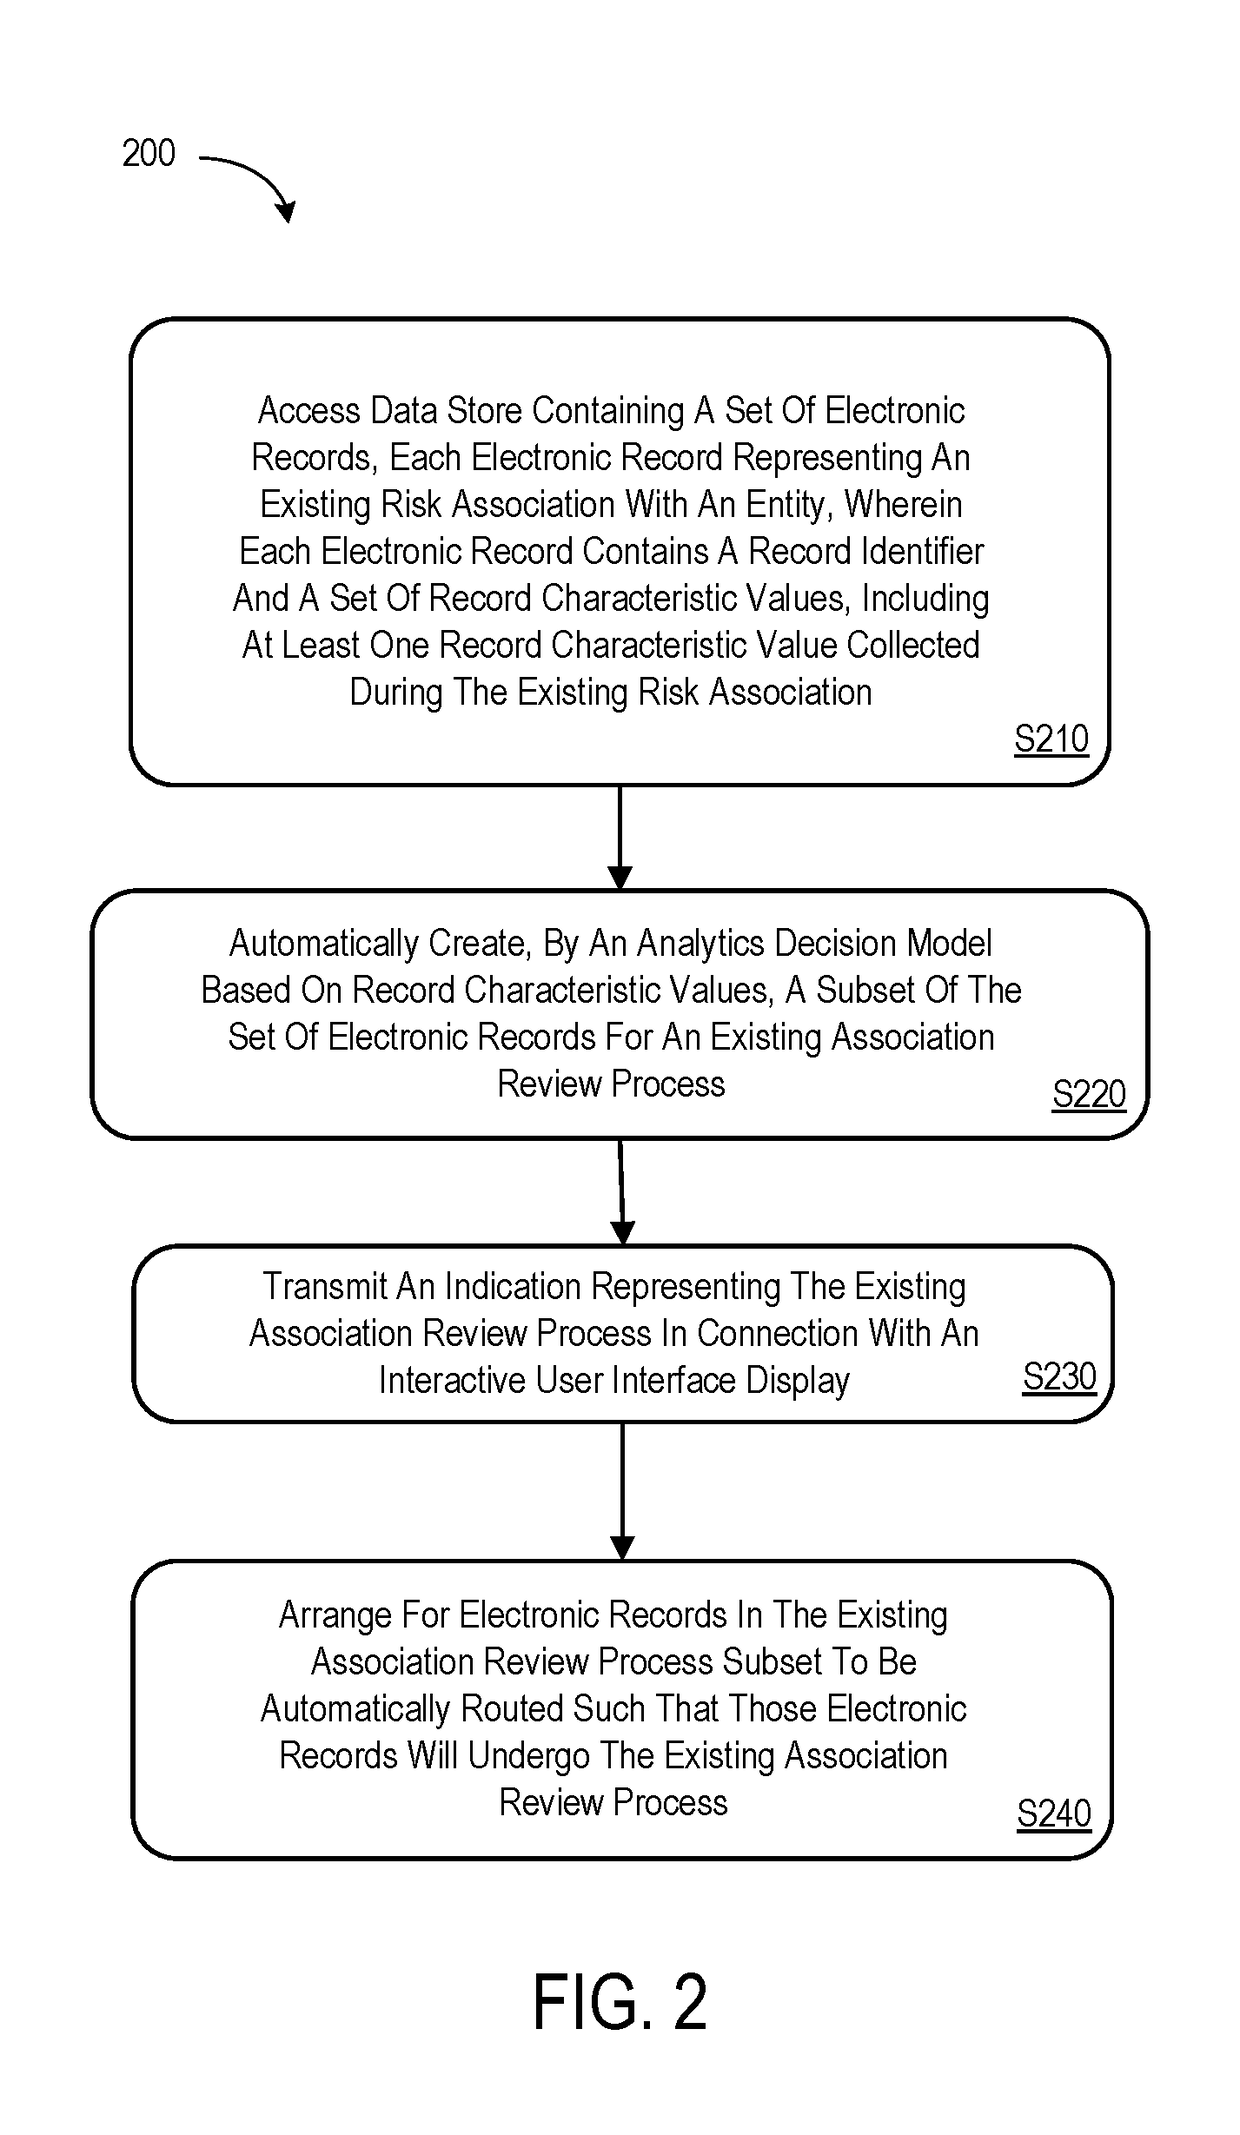 Existing association review process determination utilizing analytics decision model